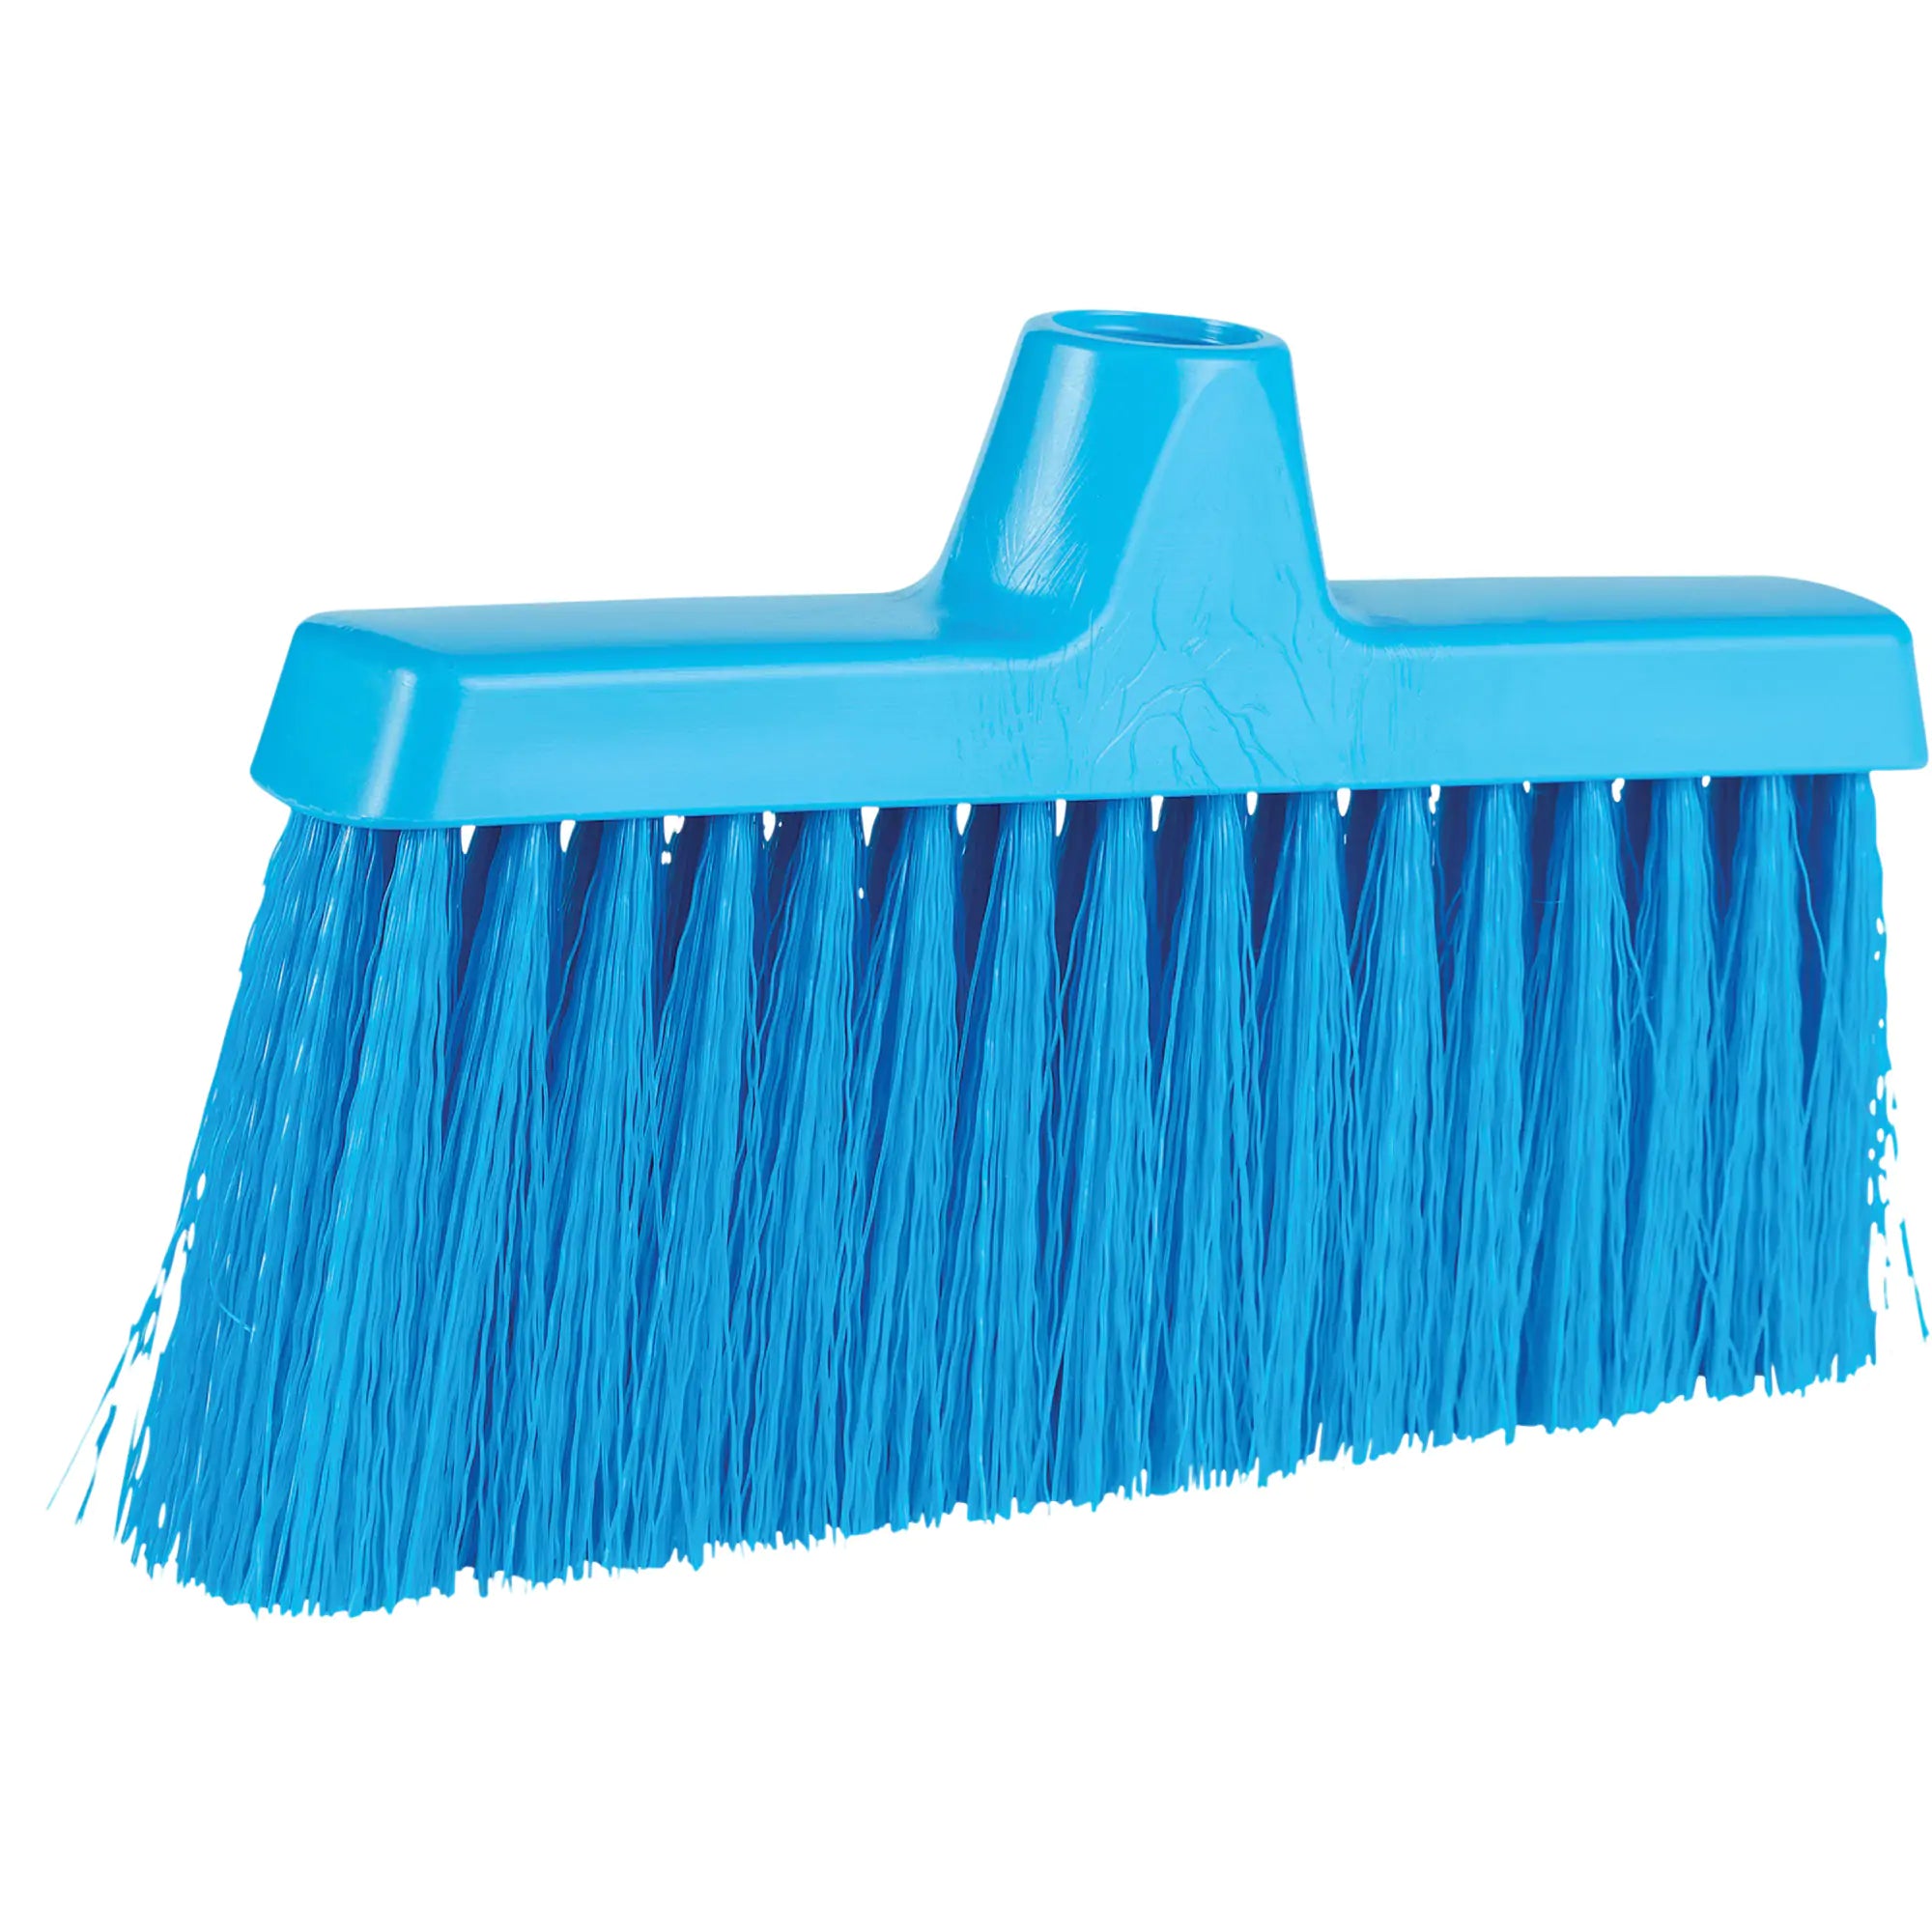 ColorCore Angle Head Broom, Medium Bristles, 10", Polypropylene, Blue